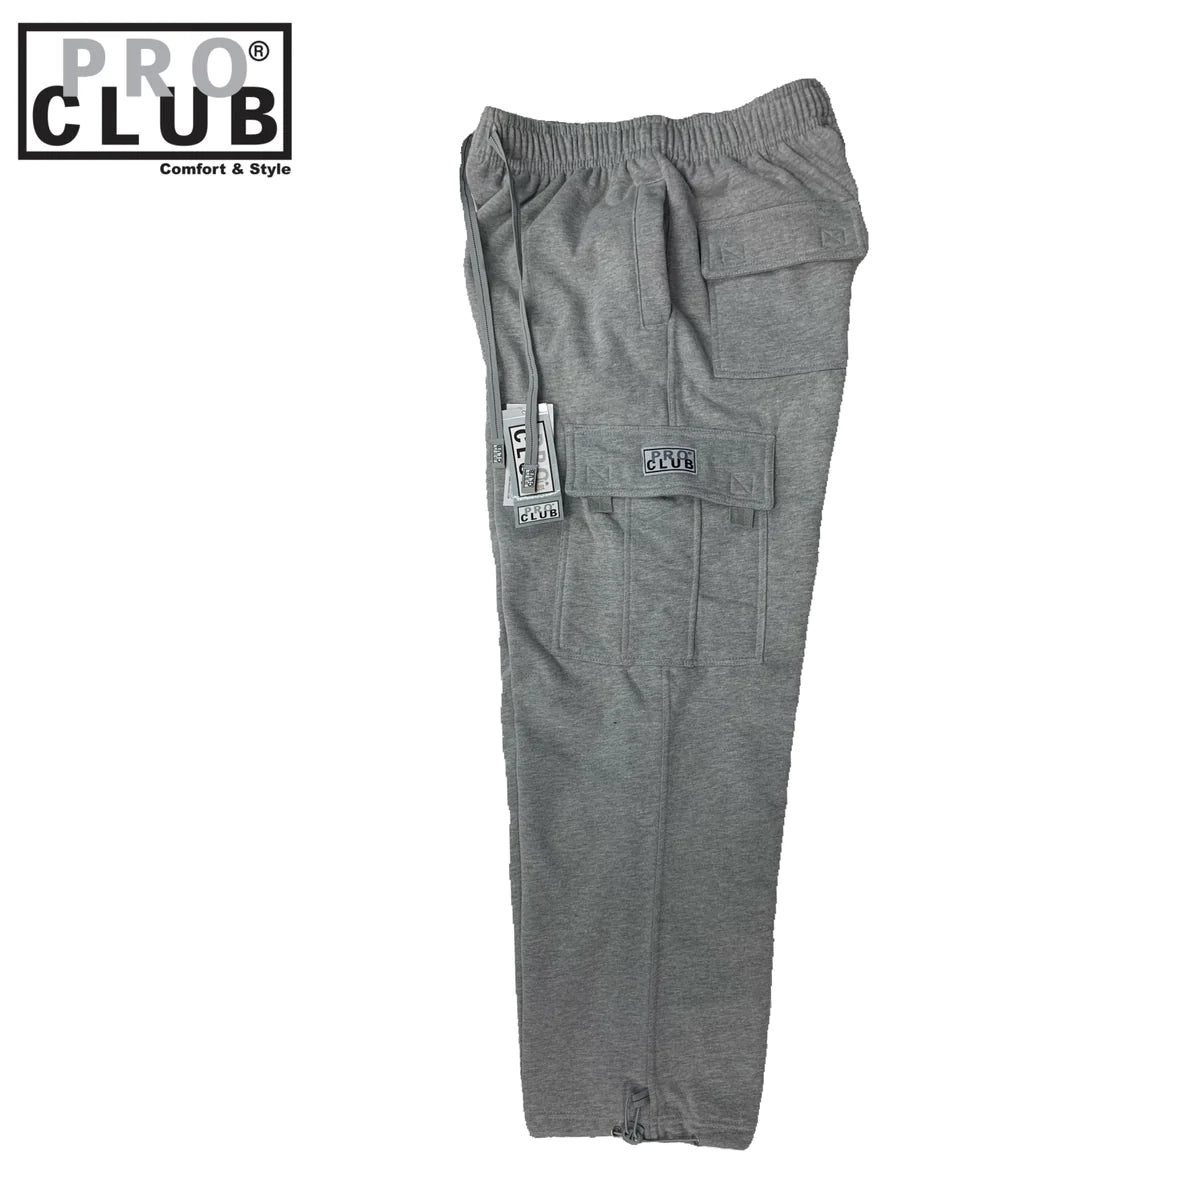 Pro Club Men's Cargo Sweatpants Cotton Casual Menswear Pocket